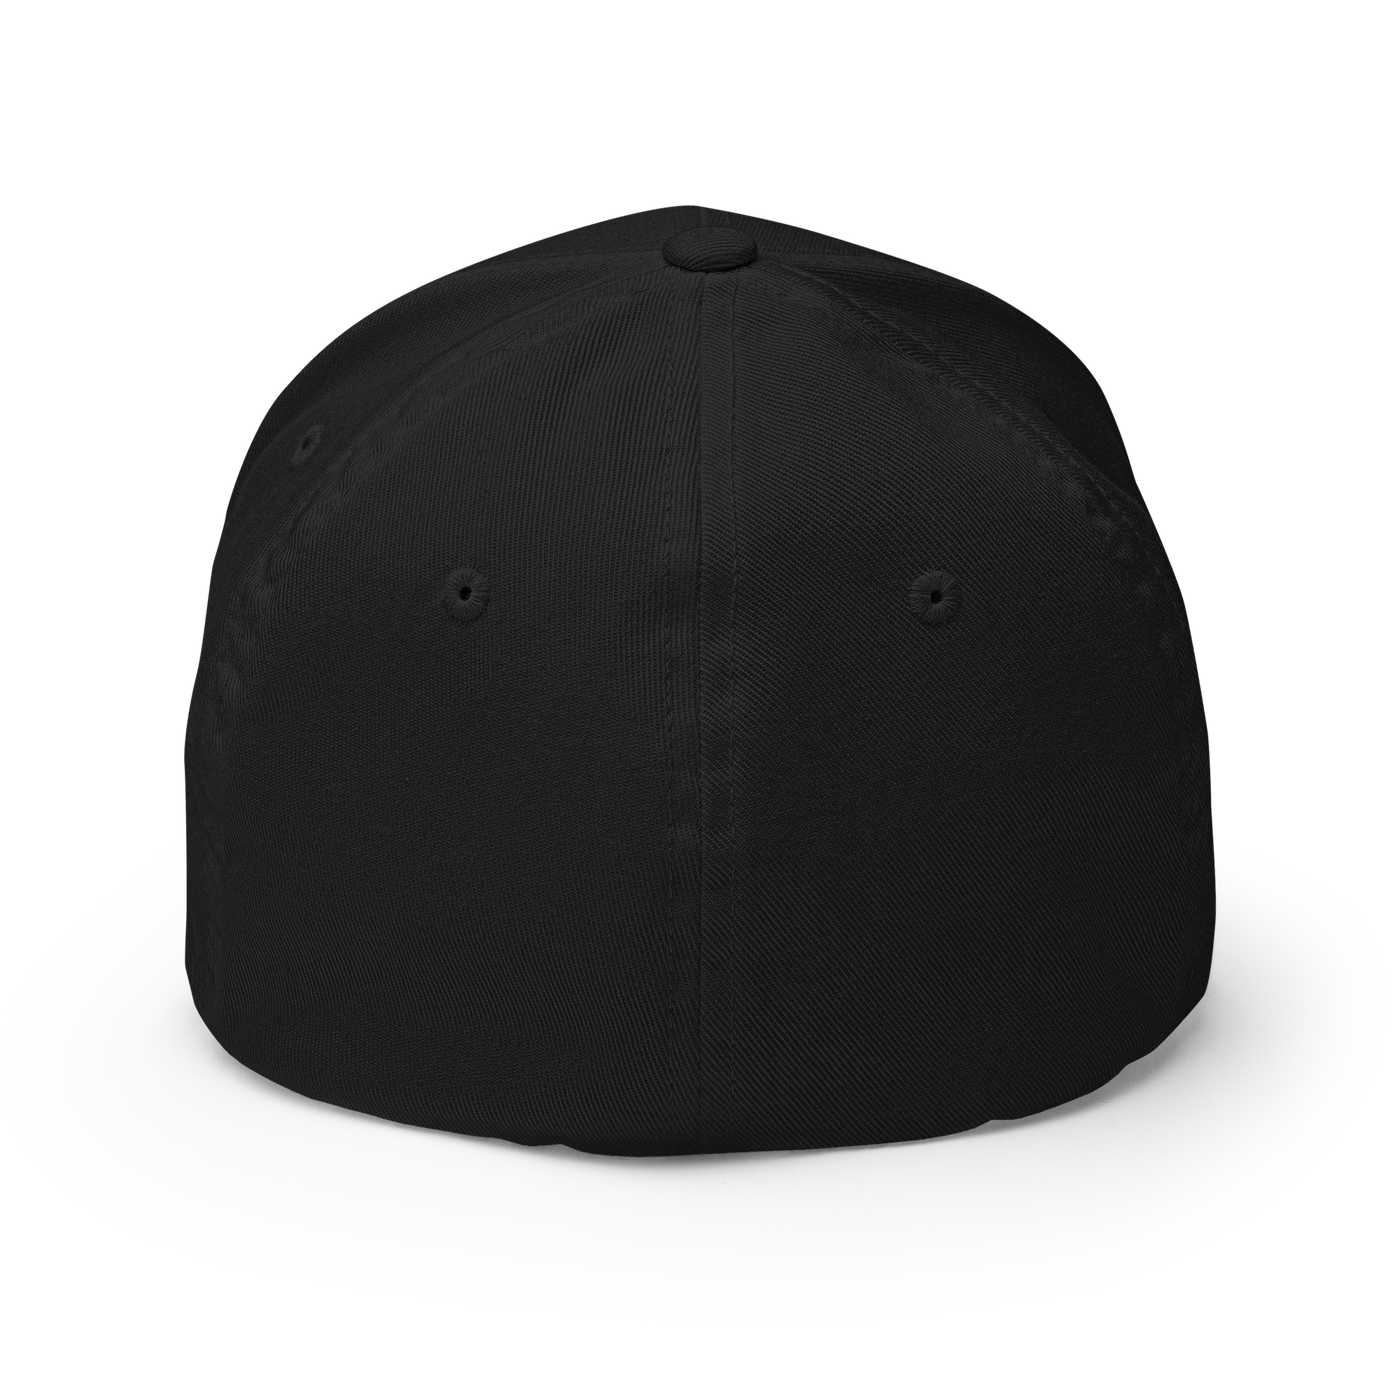 FIKA Flexfit cap - Dark Navy - S/M - Just Another Cap Store